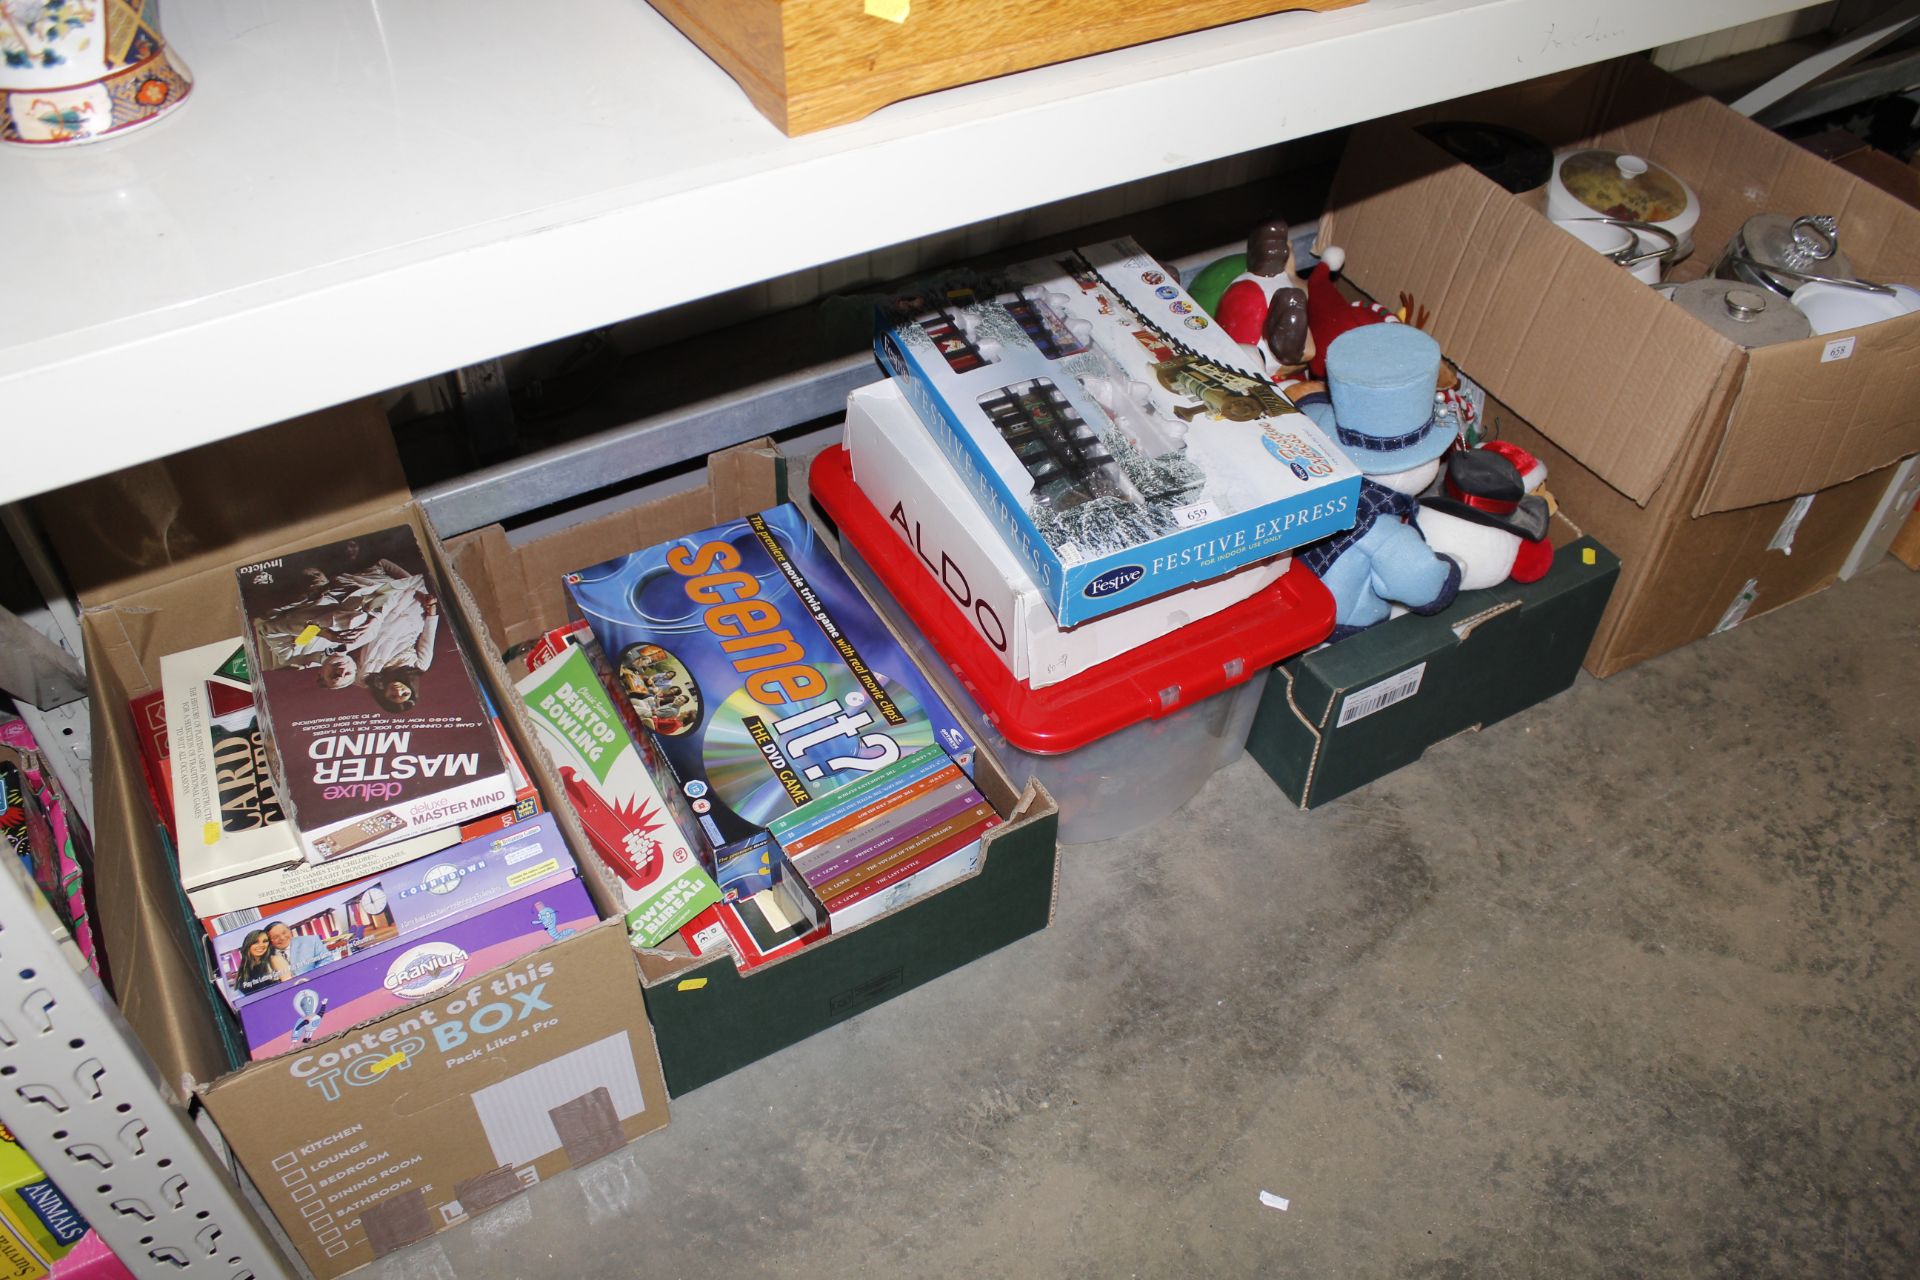 Four boxes containing various soft toys, books, bo